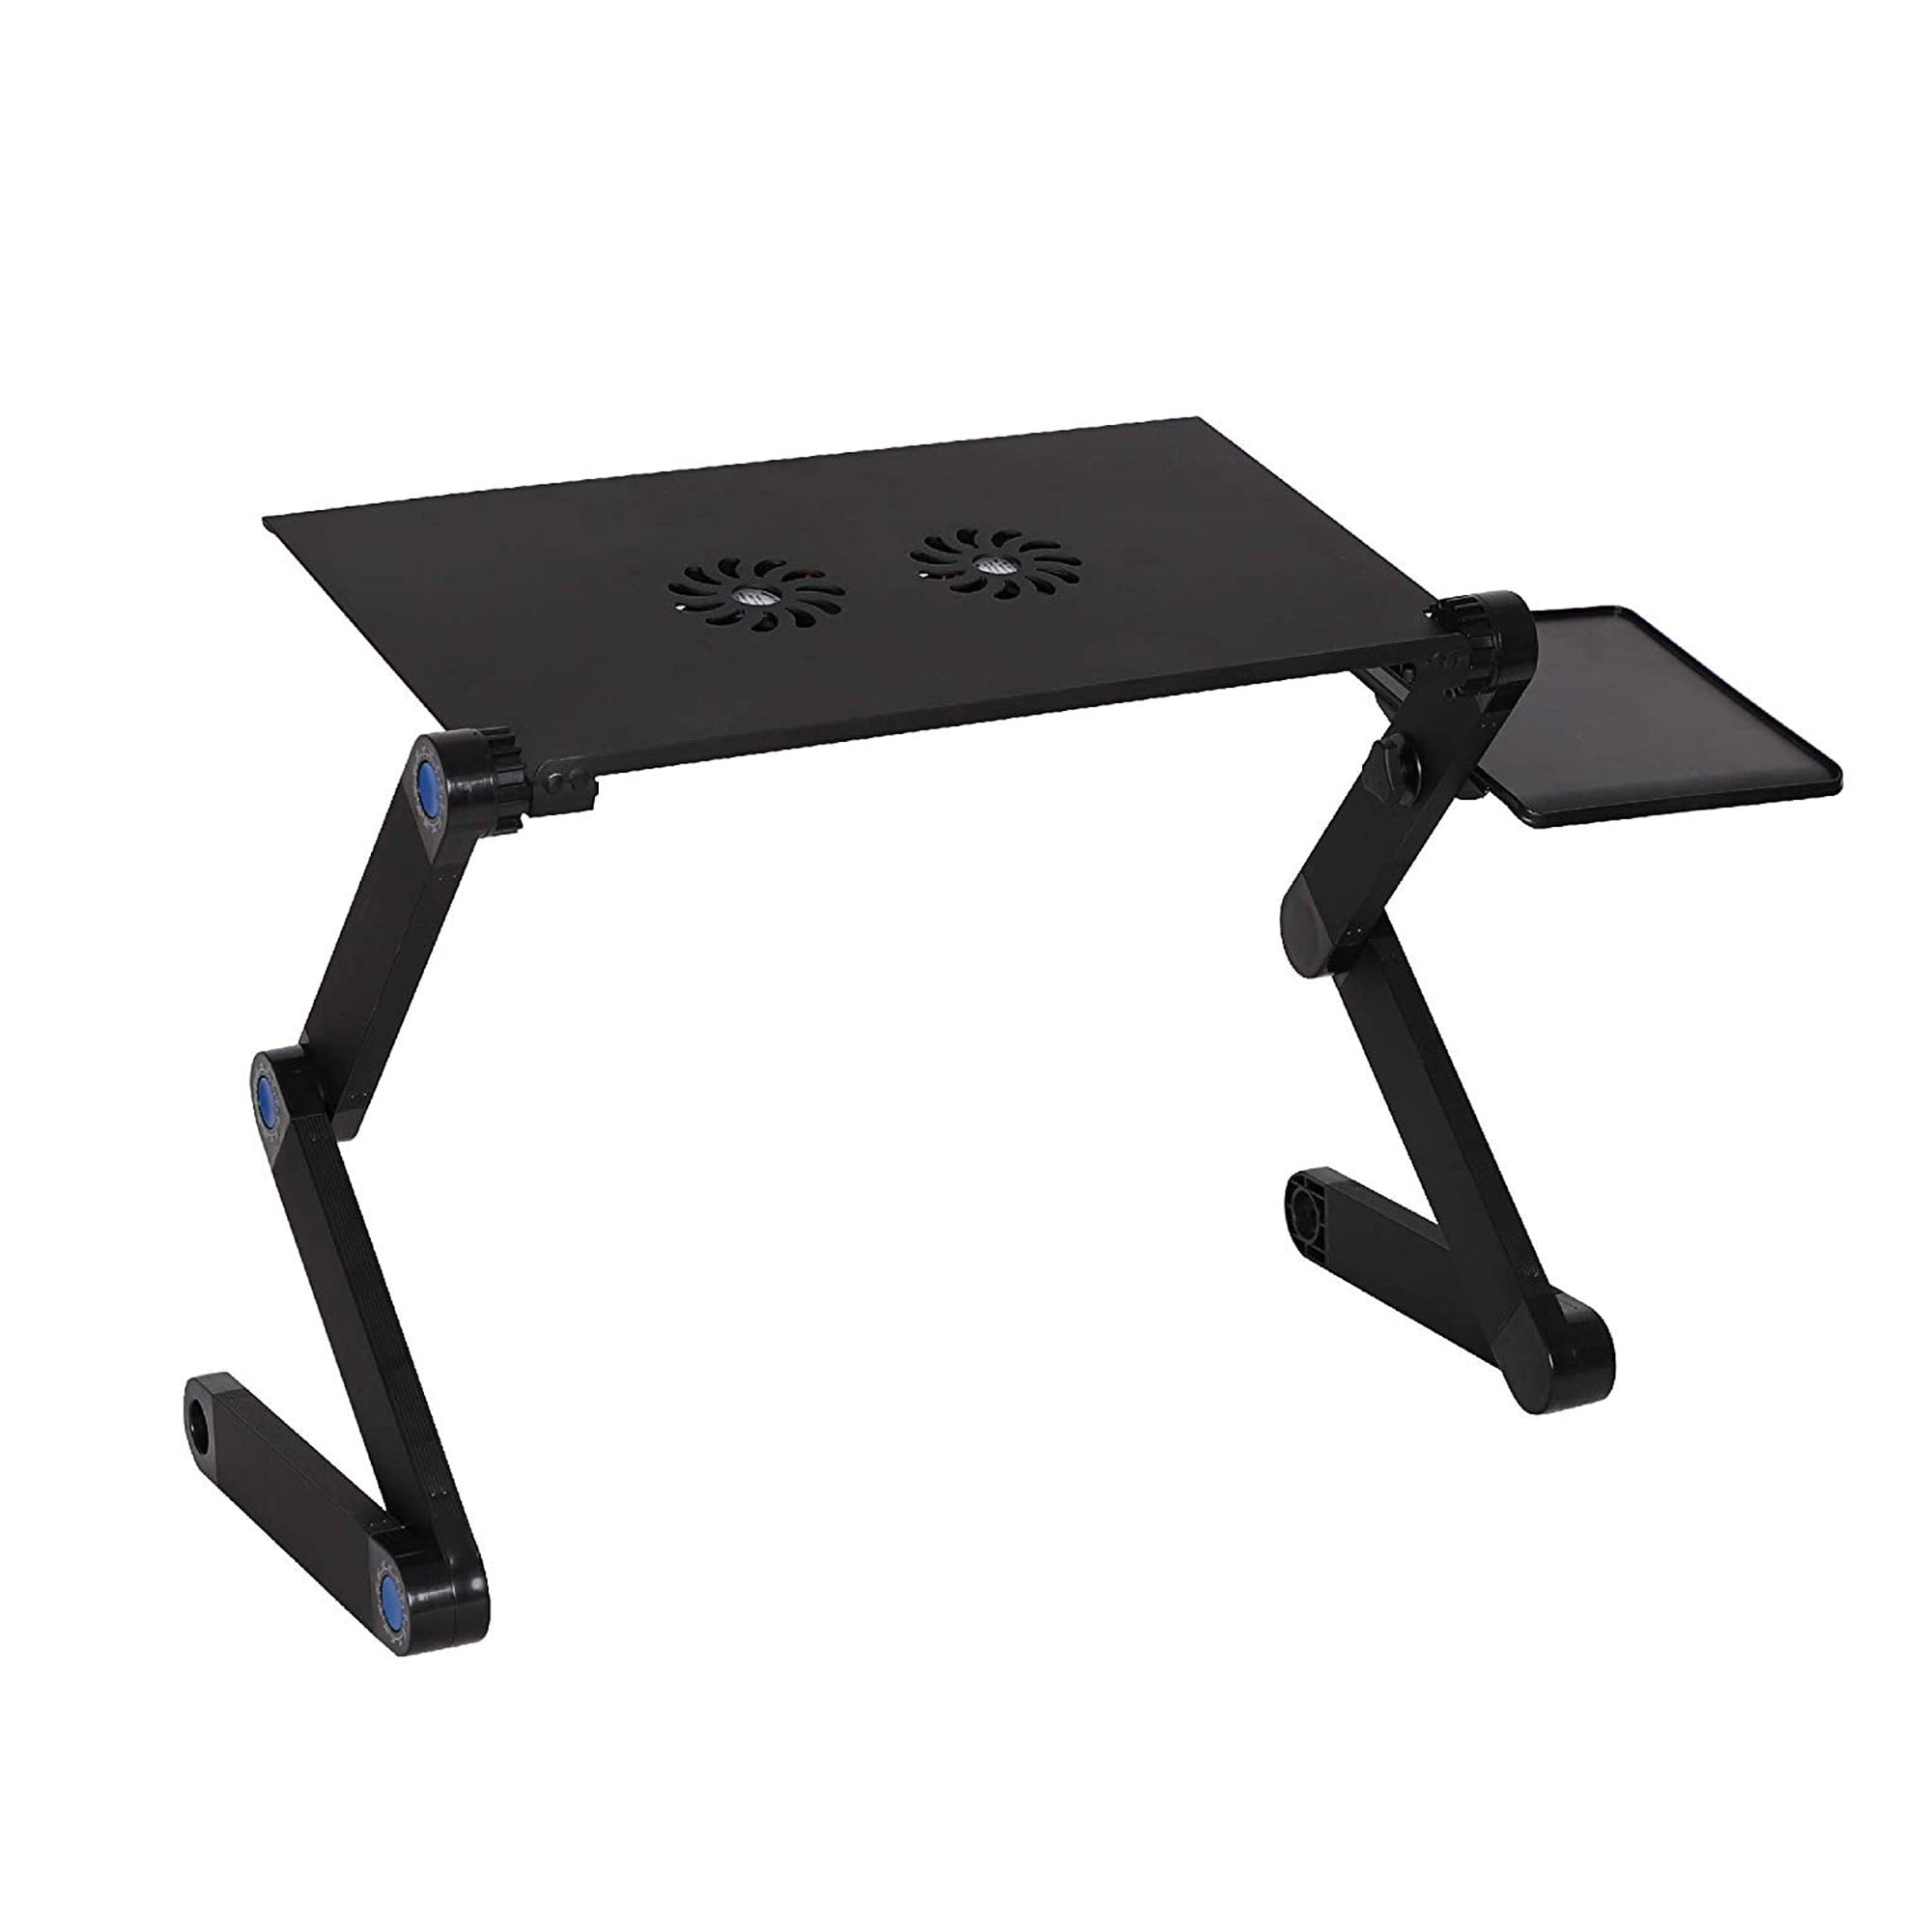 Details about   Adjustable Laptop Table Computer Desk Notebook Cooling Stand Light Riser T9H6 